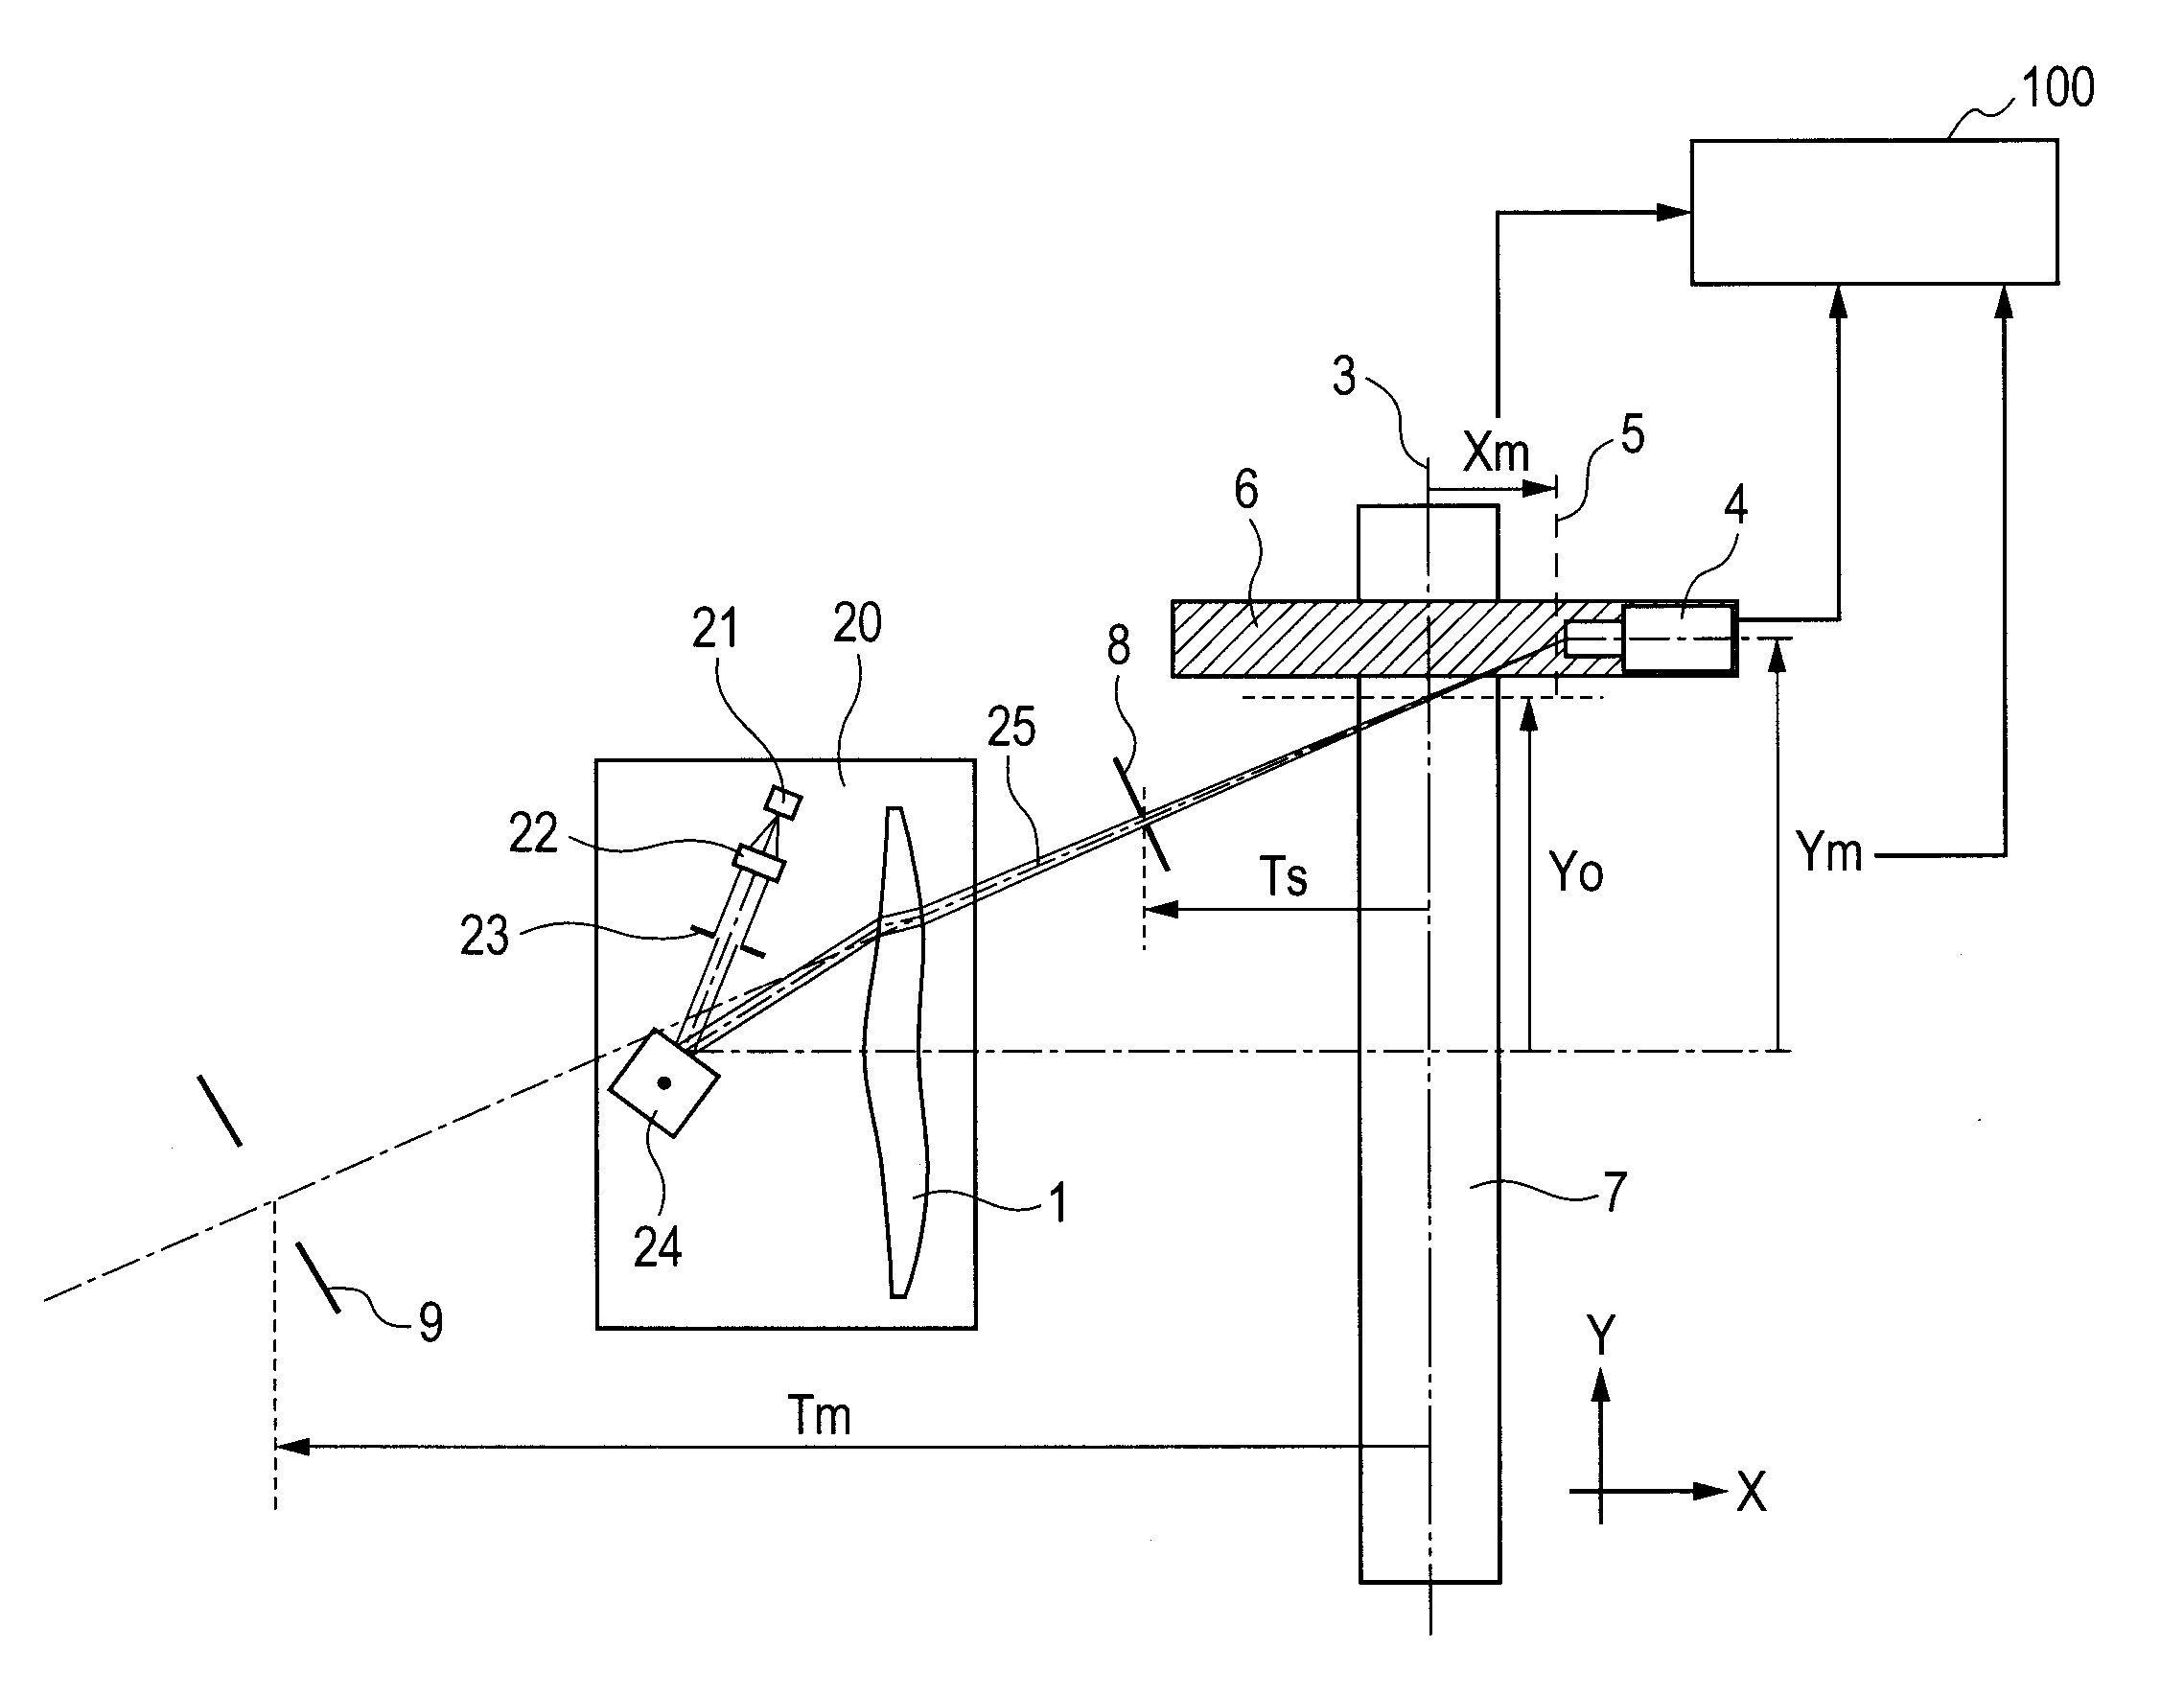 Optical characteristic measurement apparatus